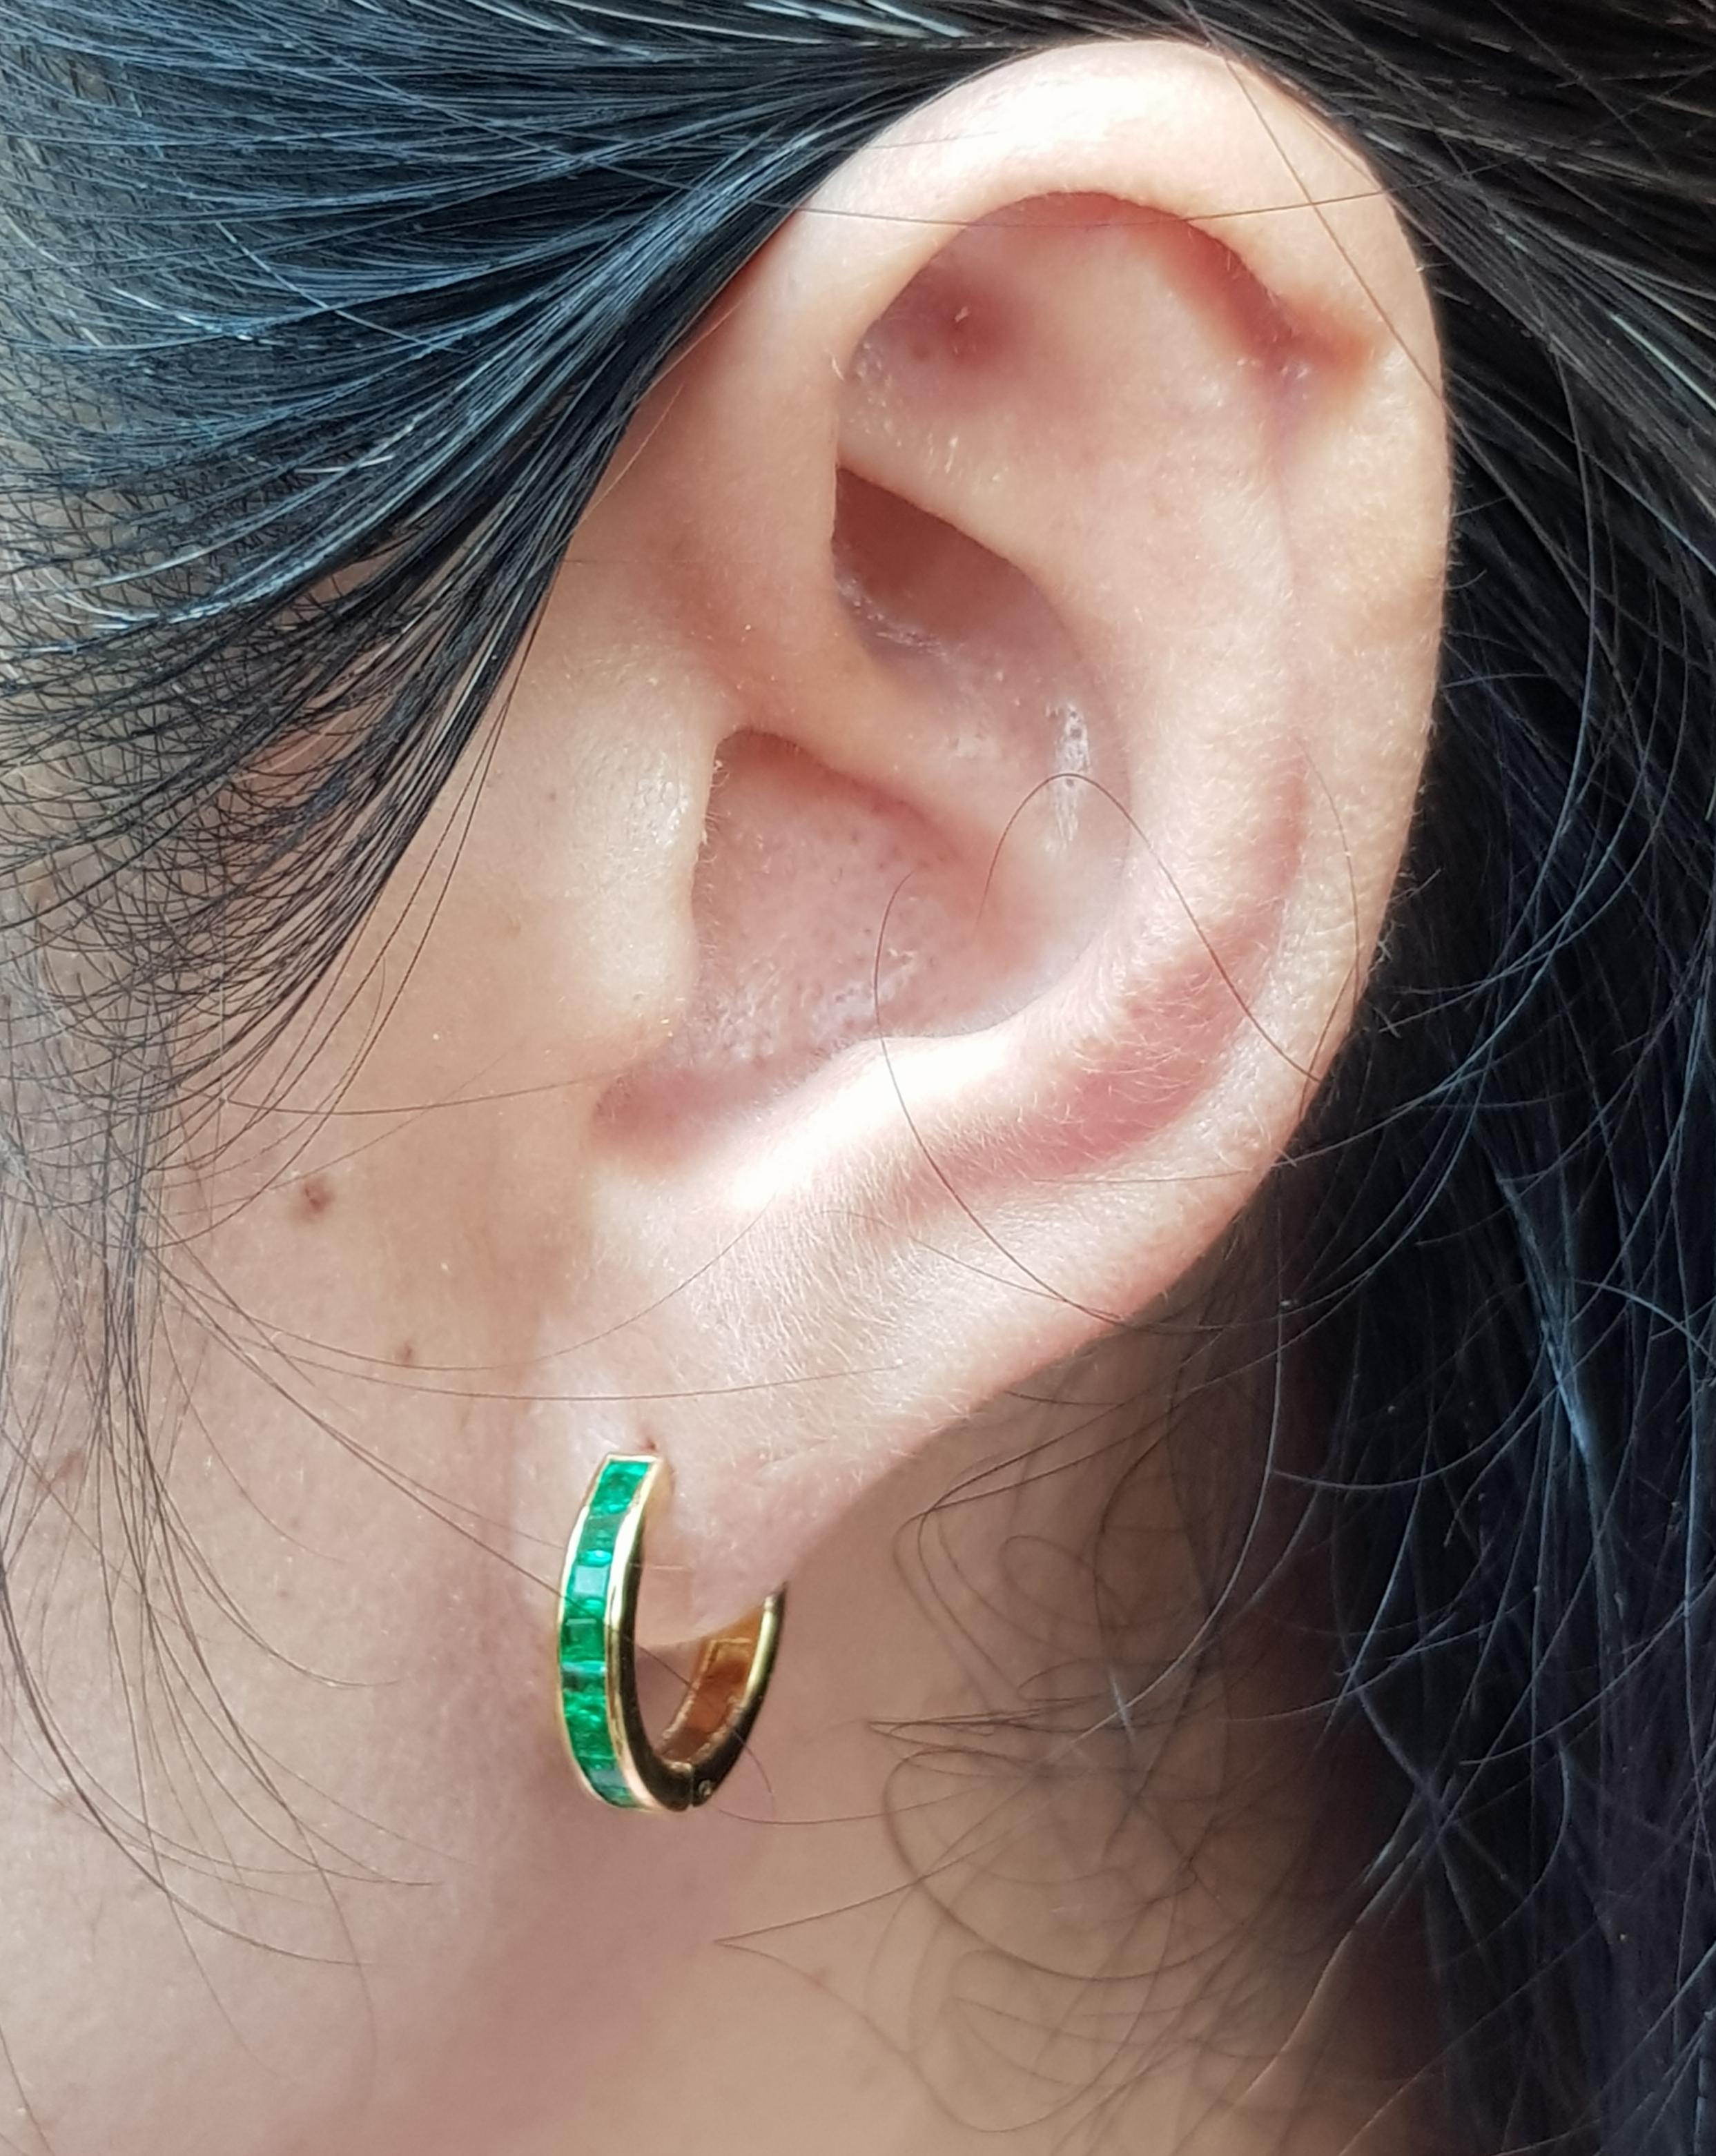 Emerald 0.84 carat Earrings set in 18 Karat Gold Settings

Width:  0.2 cm 
Length: 1.5 cm
Total Weight: 4.02 grams

